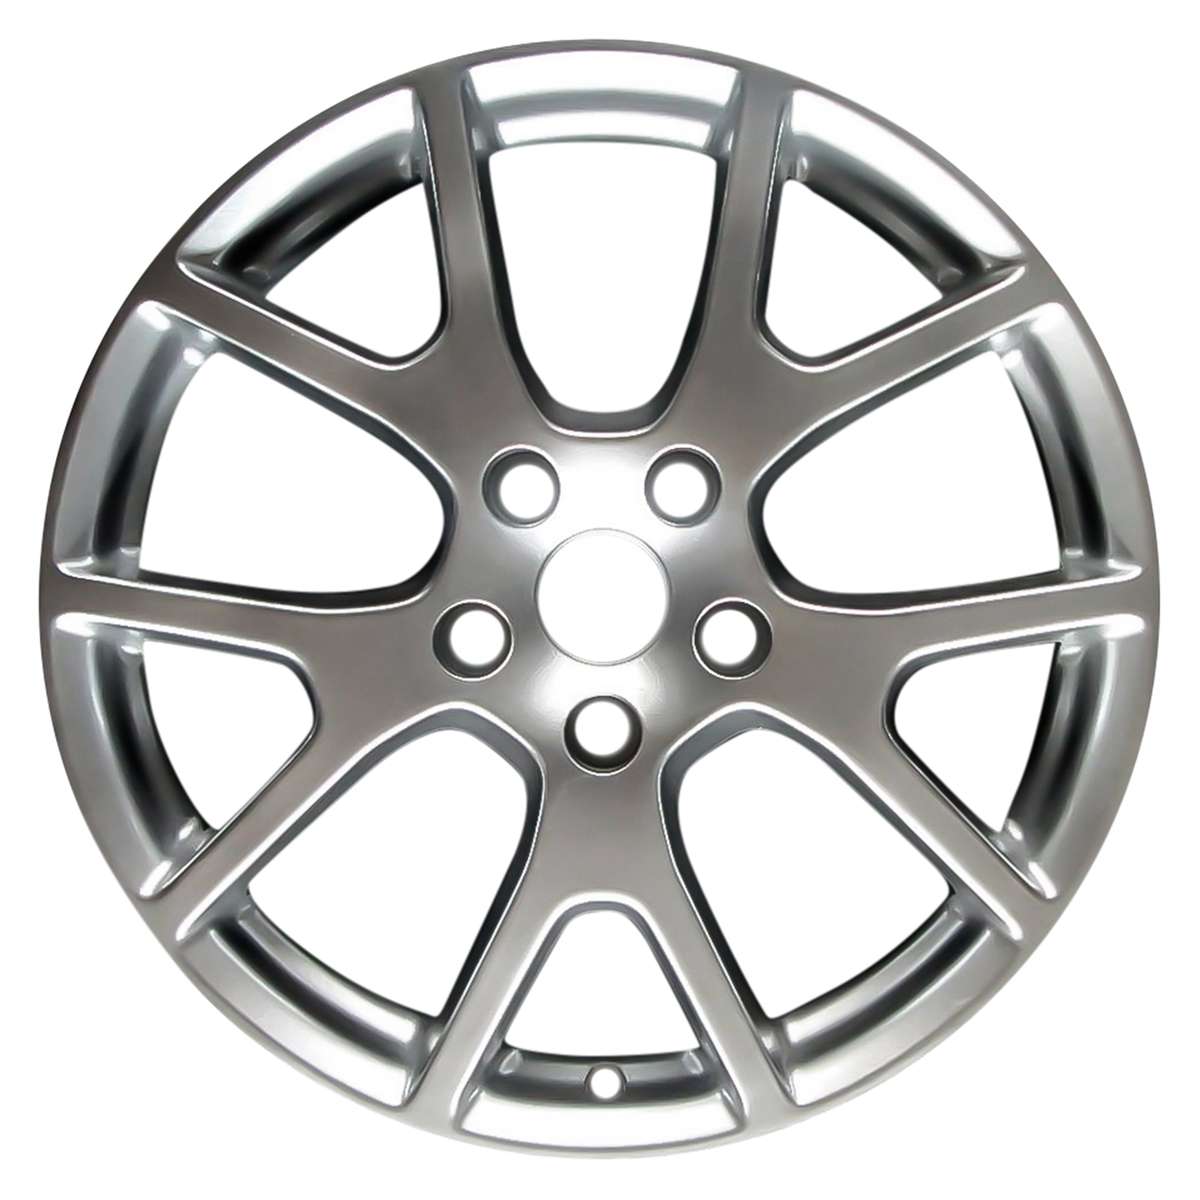 2012 Dodge Journey 19" OEM Wheel Rim W2500H